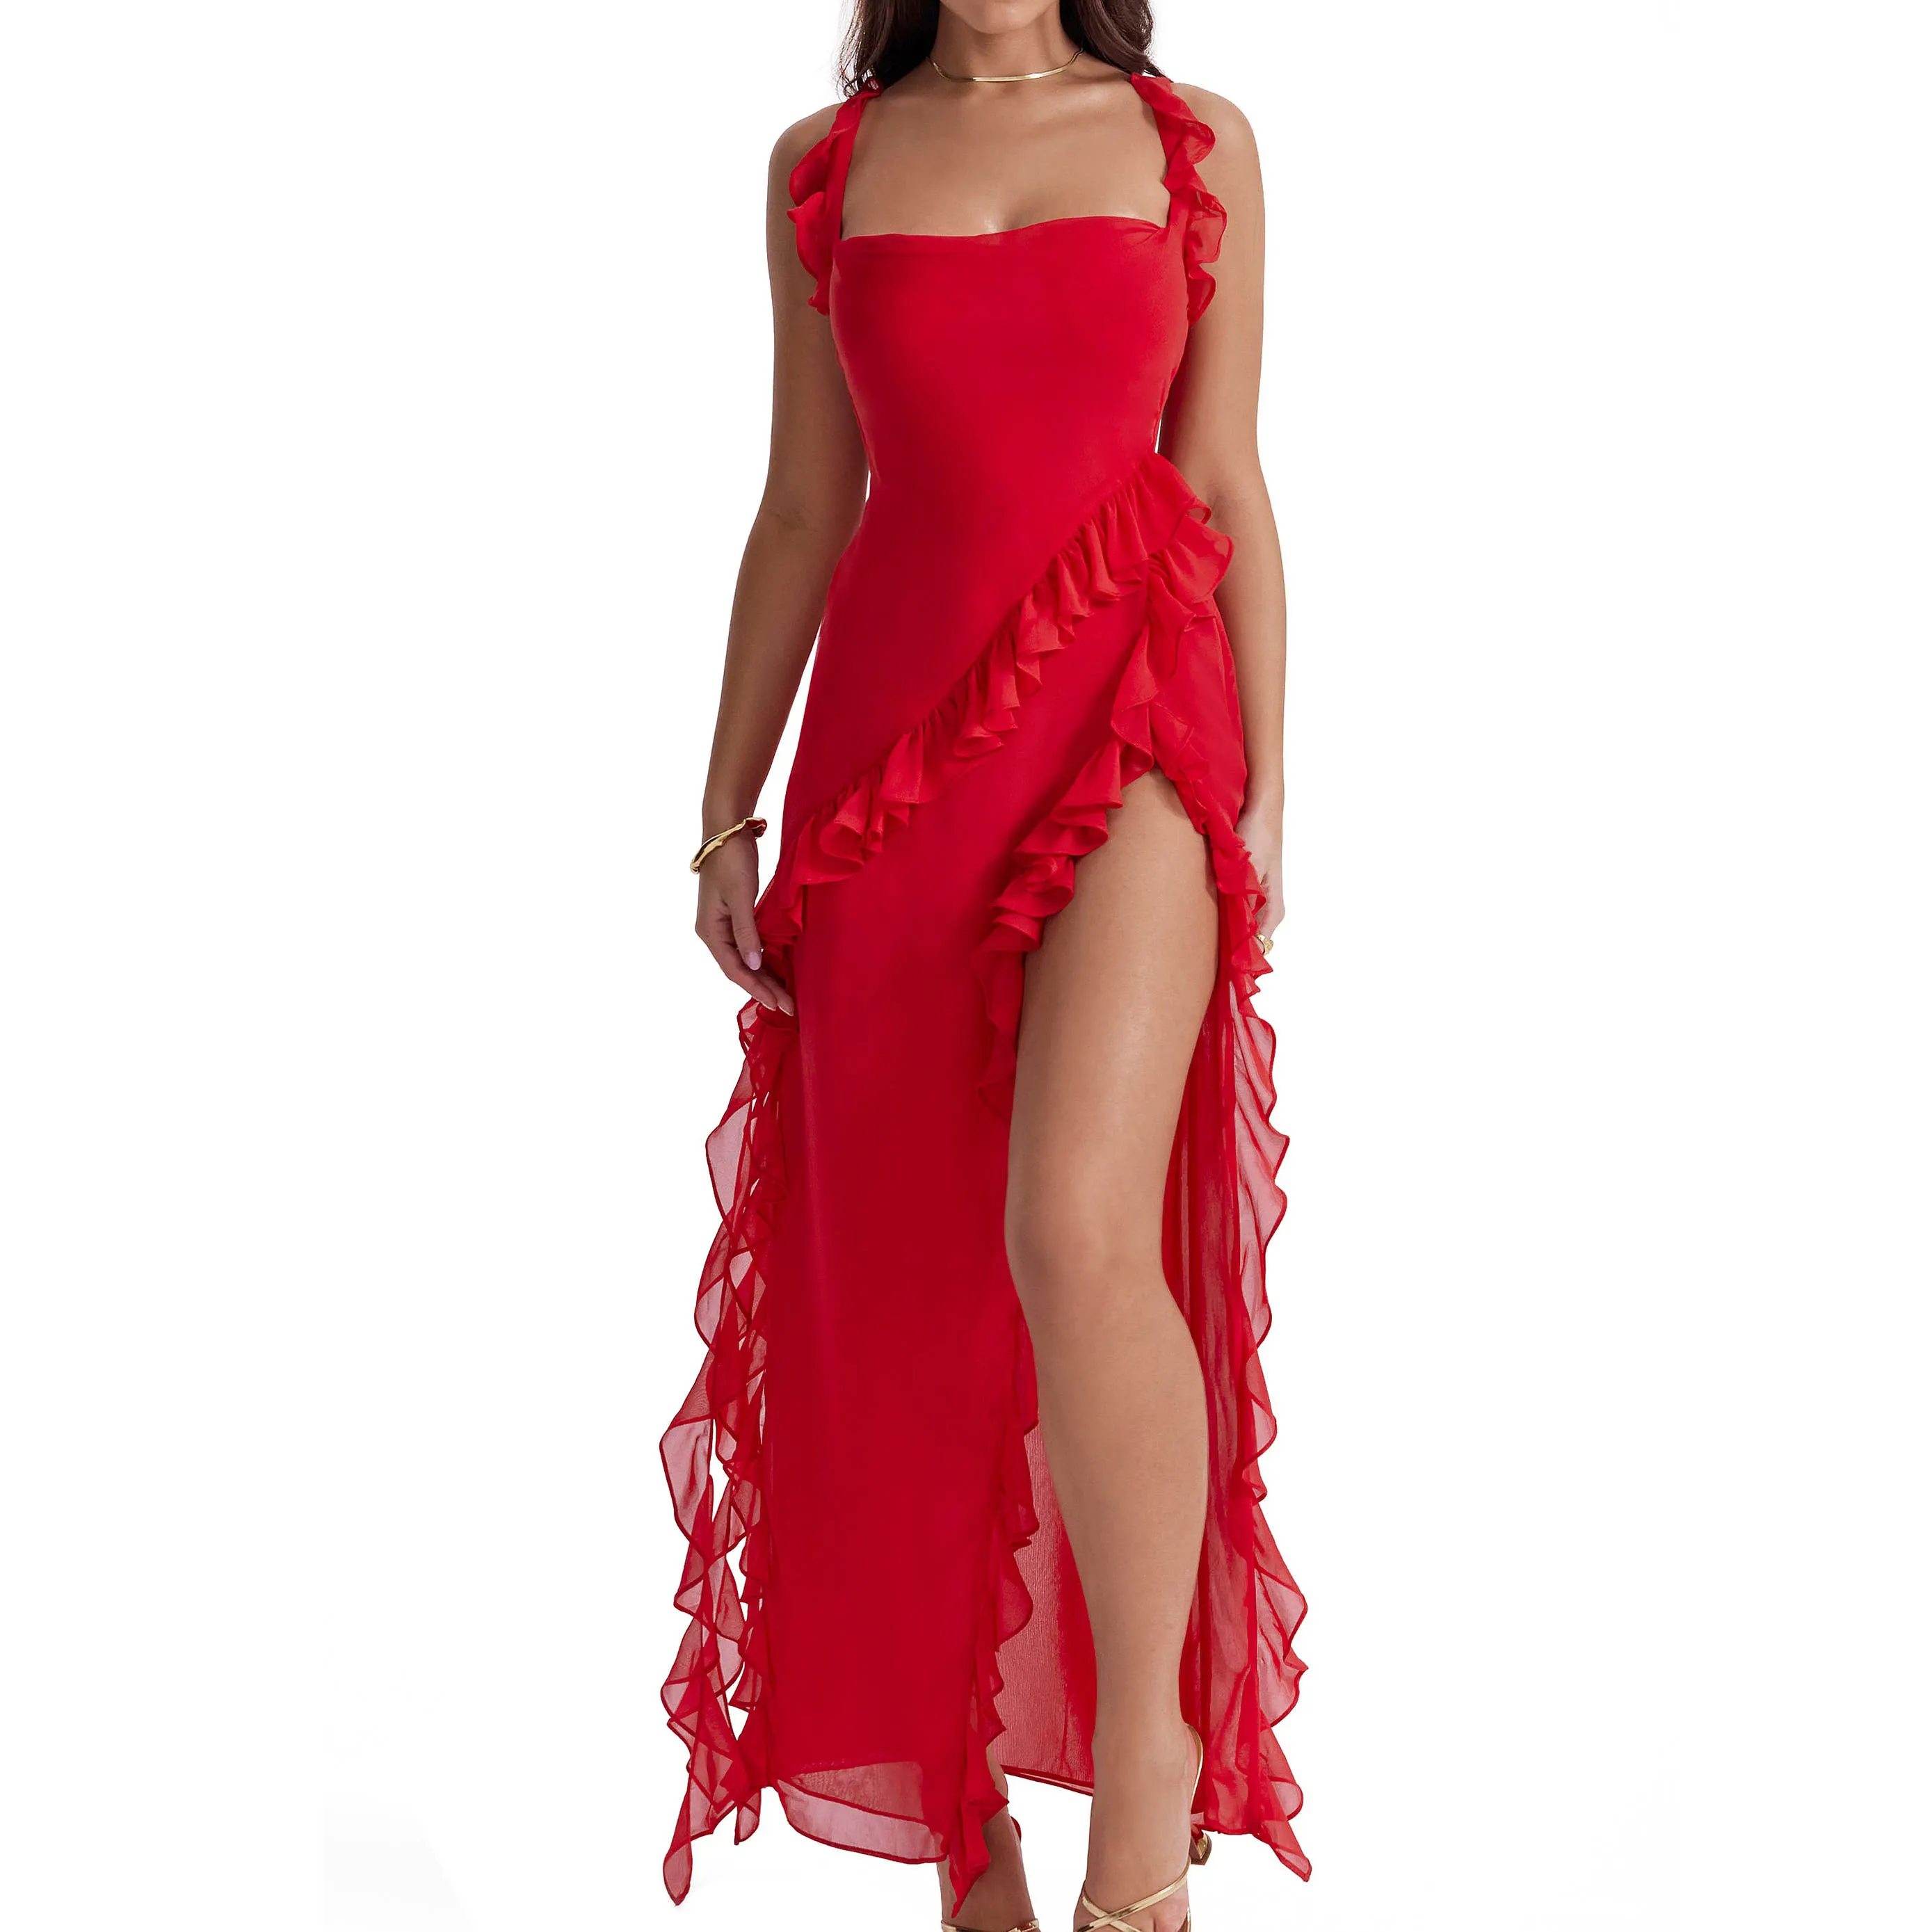 Gaun malam wanita tanpa lengan romantis Ruffle samping kustom mewah asimetris merah sifon jala gaun panjang klasik